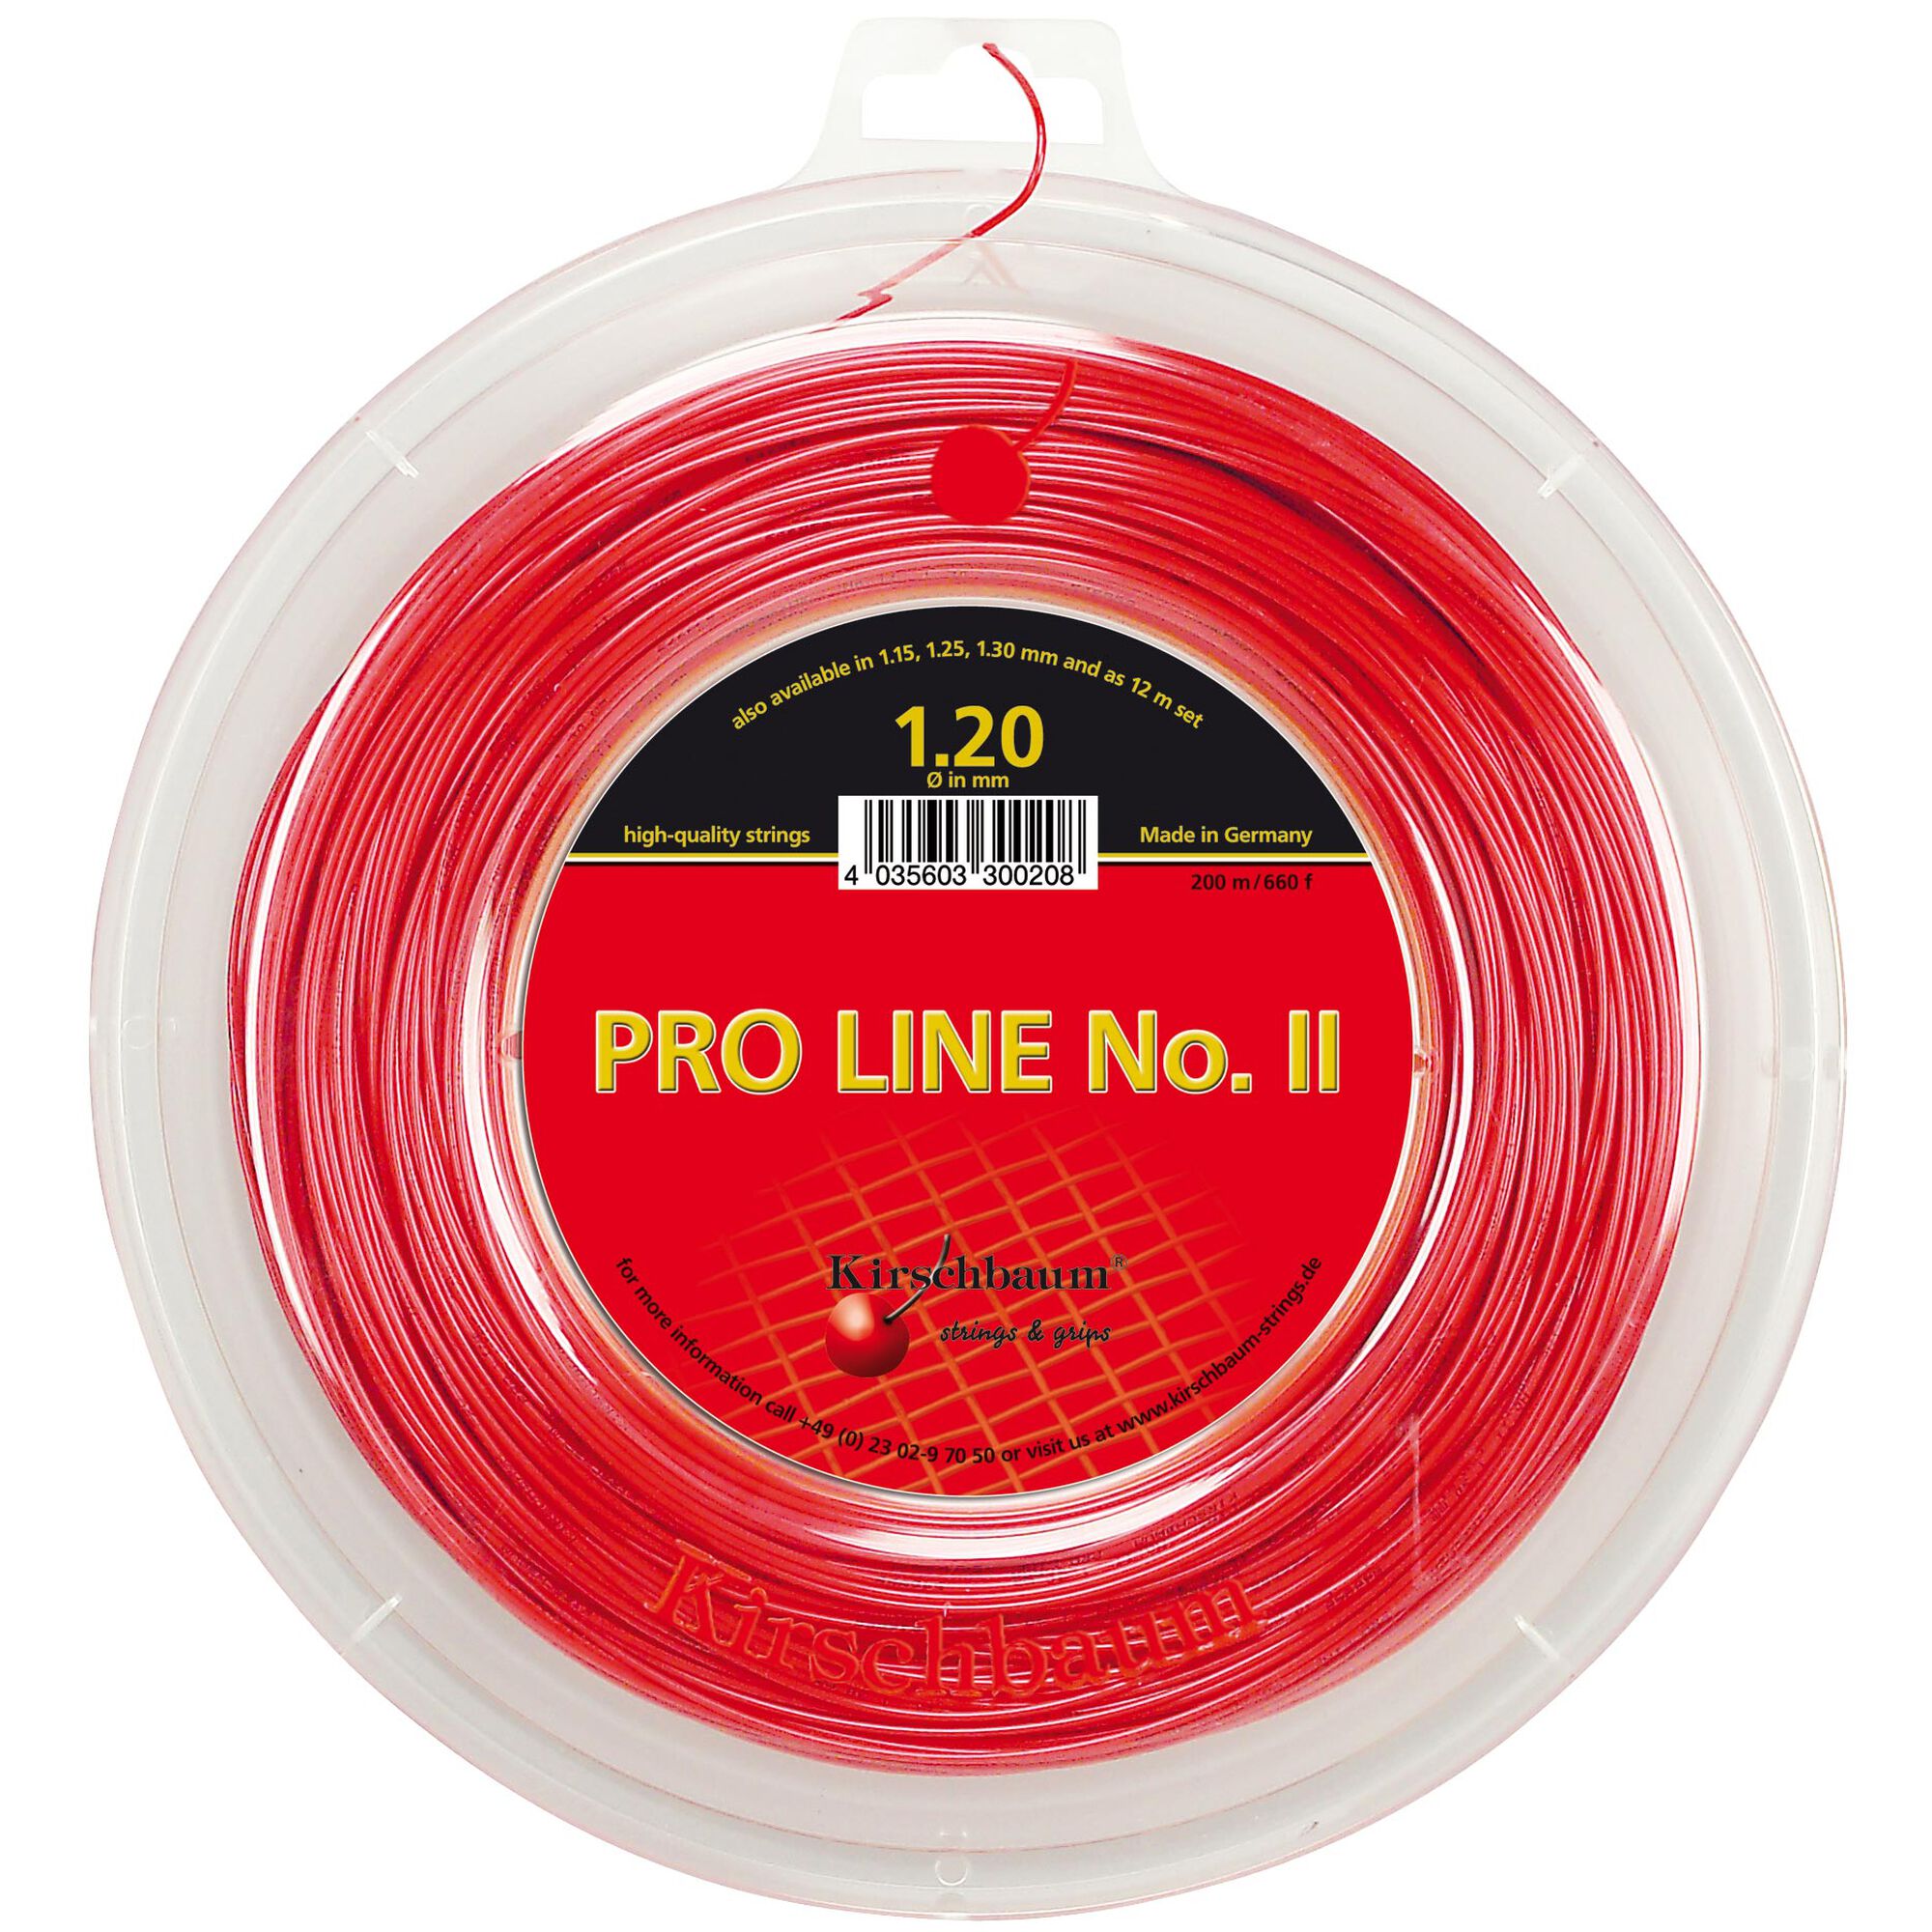 Pro Line No. II String Reel 200m - Red